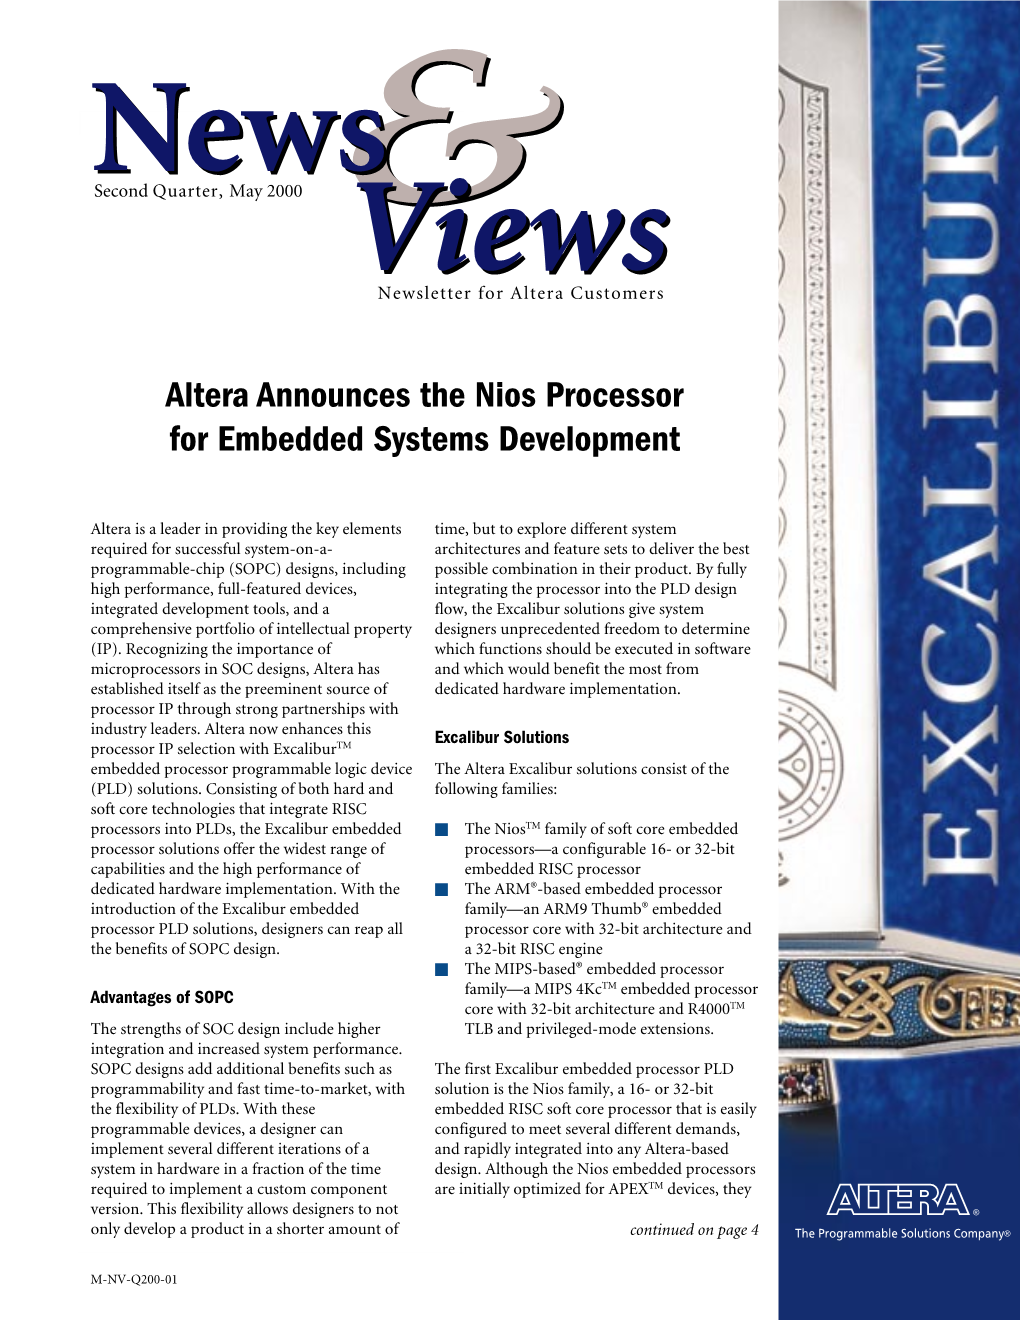 Altera Announces the Nios Processor for Embedded Systems Development